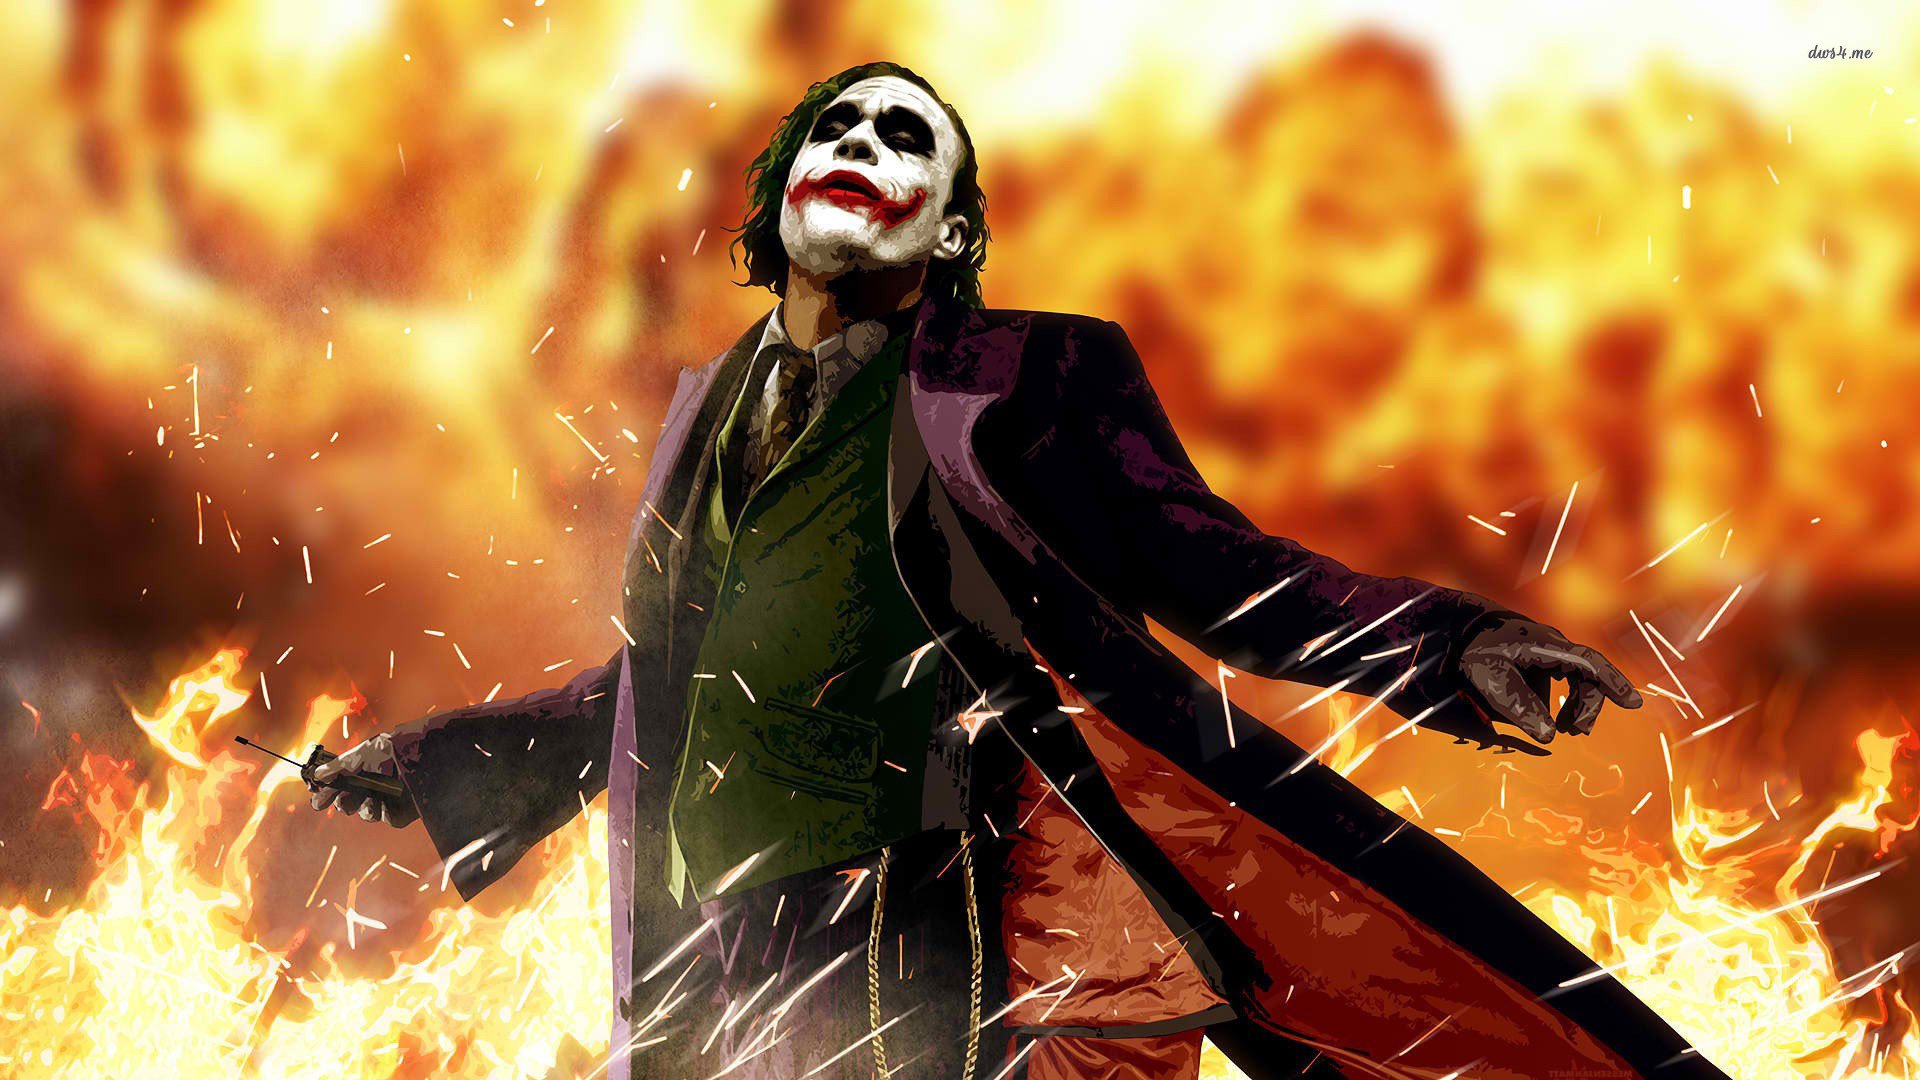 Joker The Dark Knight HD Wallpaper Movies Wallpapers